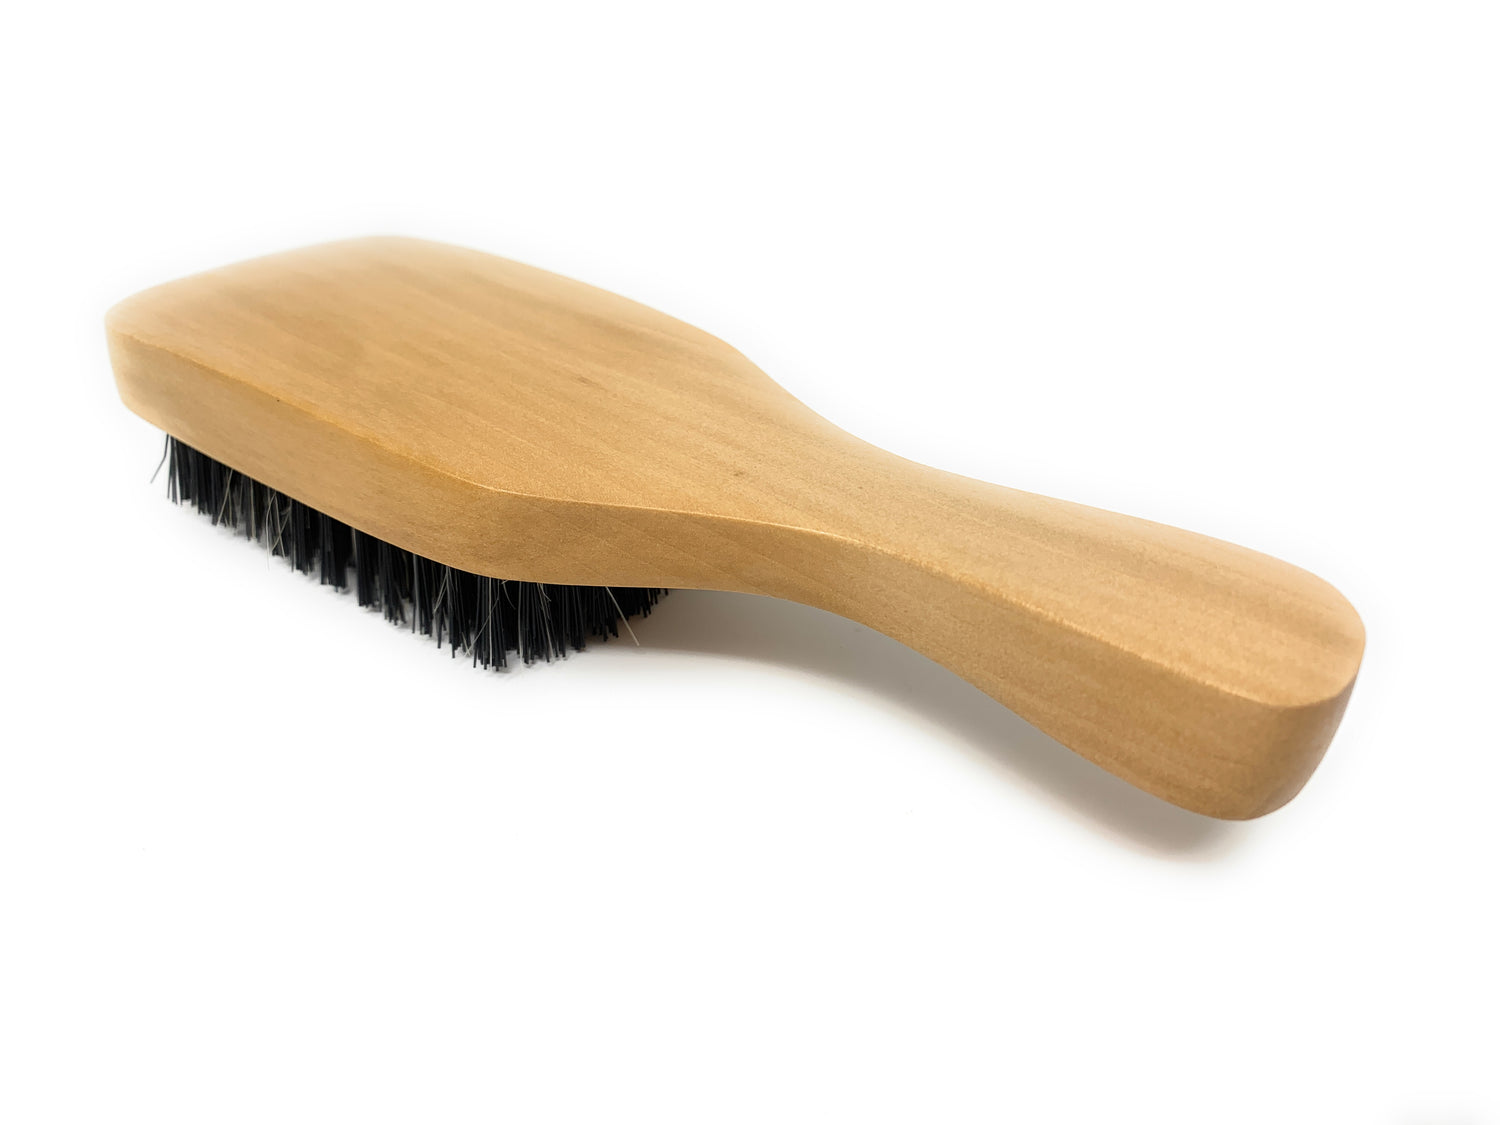 Scalpmaster Club Hair Brush, Wave Hair Brush, Curved Oval Palm